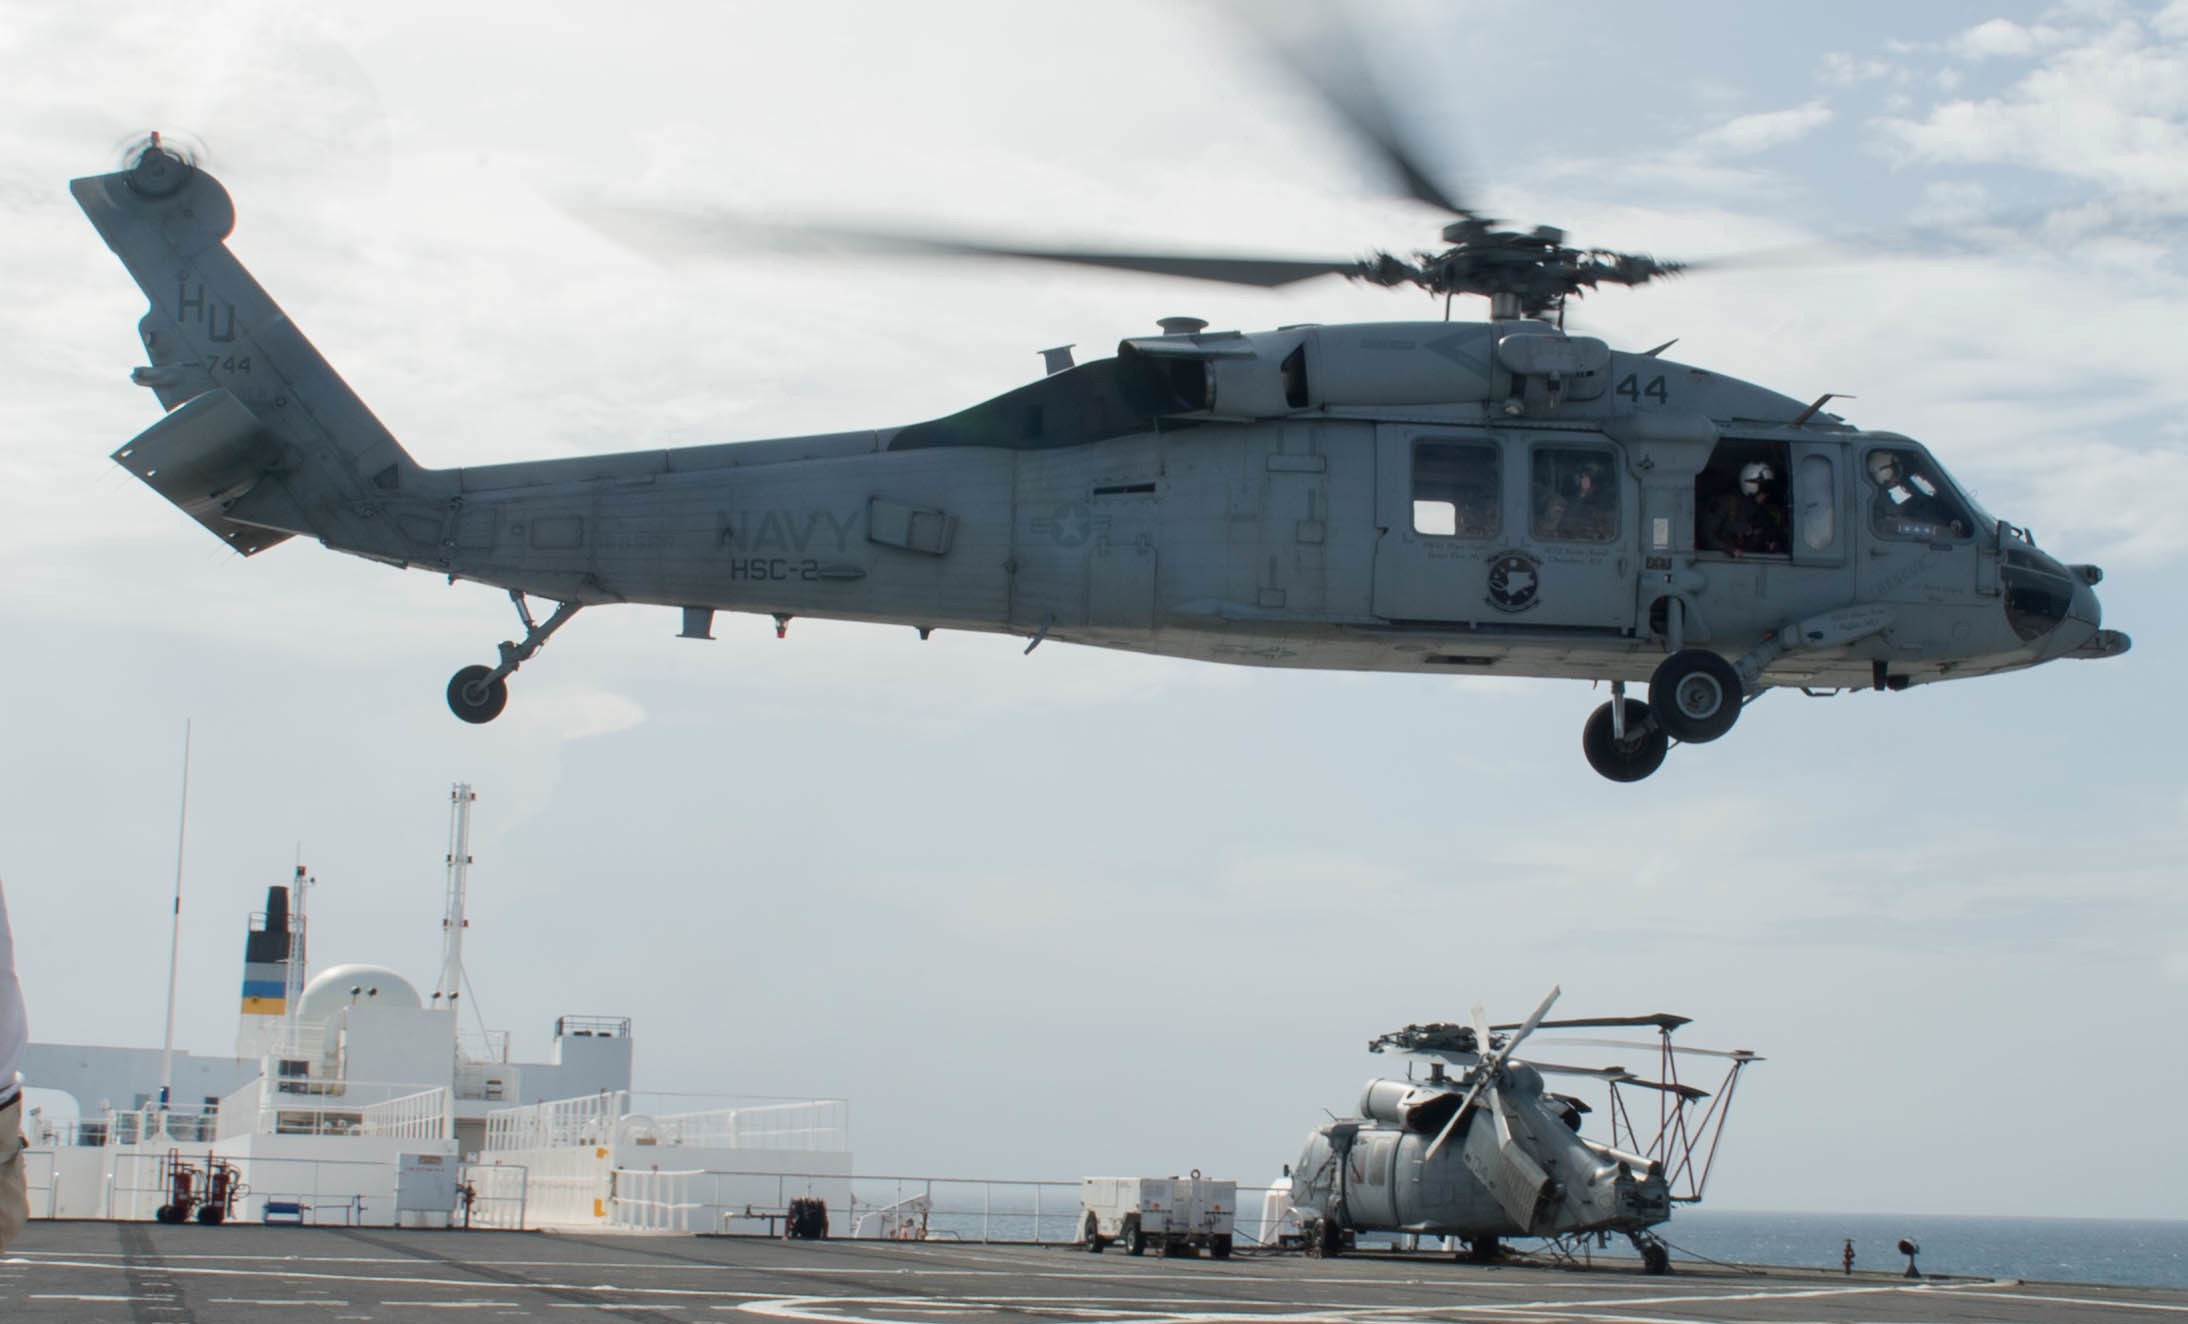 hsc-2 fleet angels helicopter sea combat squadron mh-60s seahawk us navy 2017 02 usns comfort t-ah-20 hospital ship